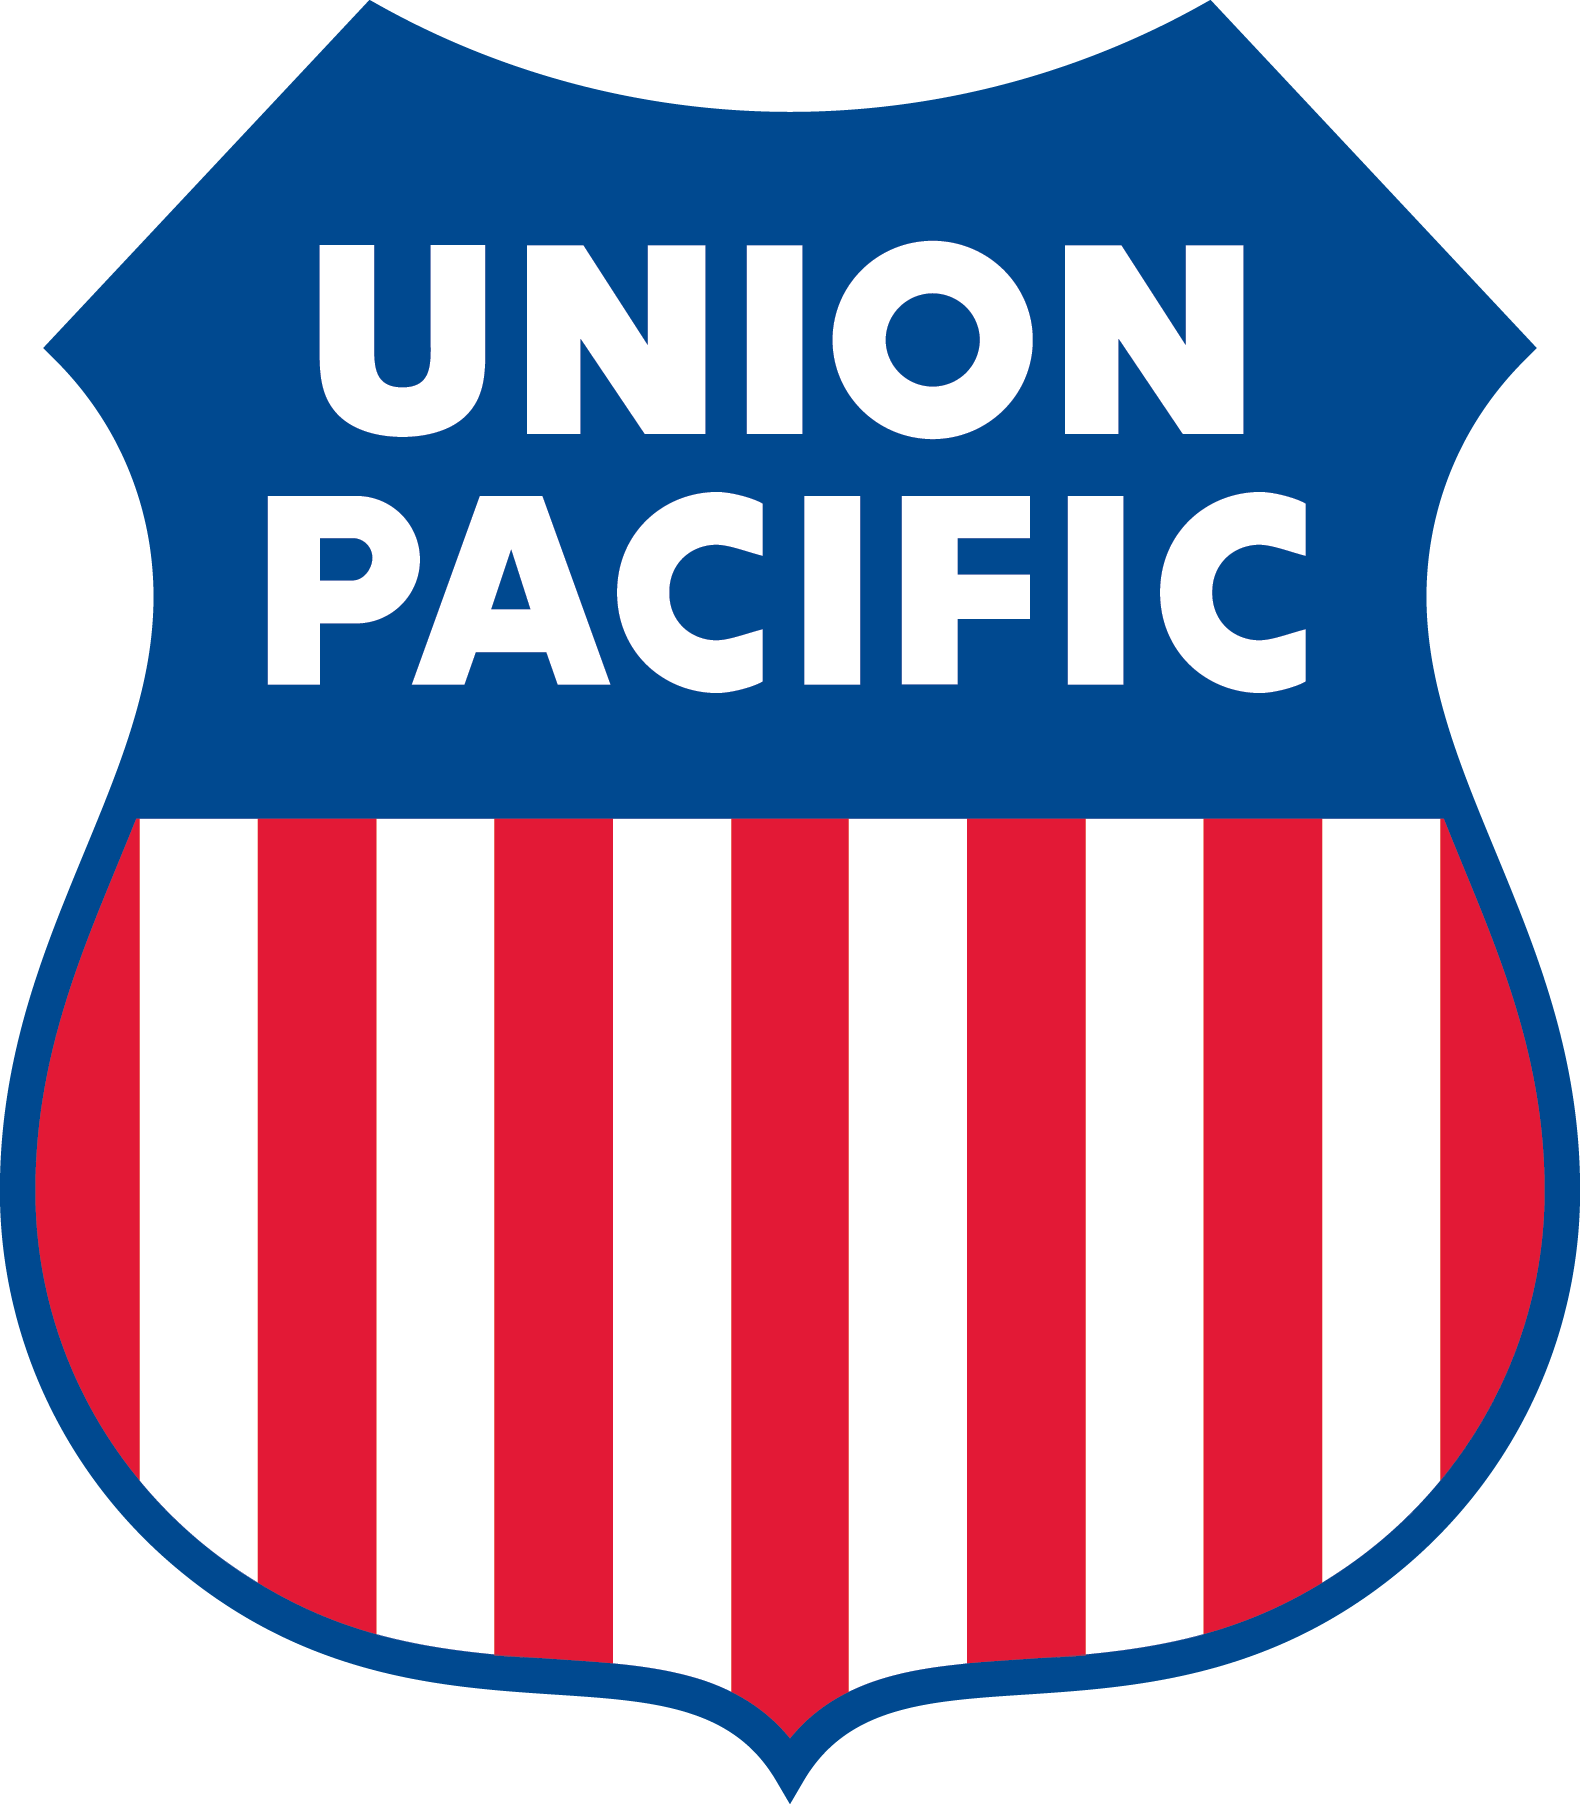 Union Pacific Foundation